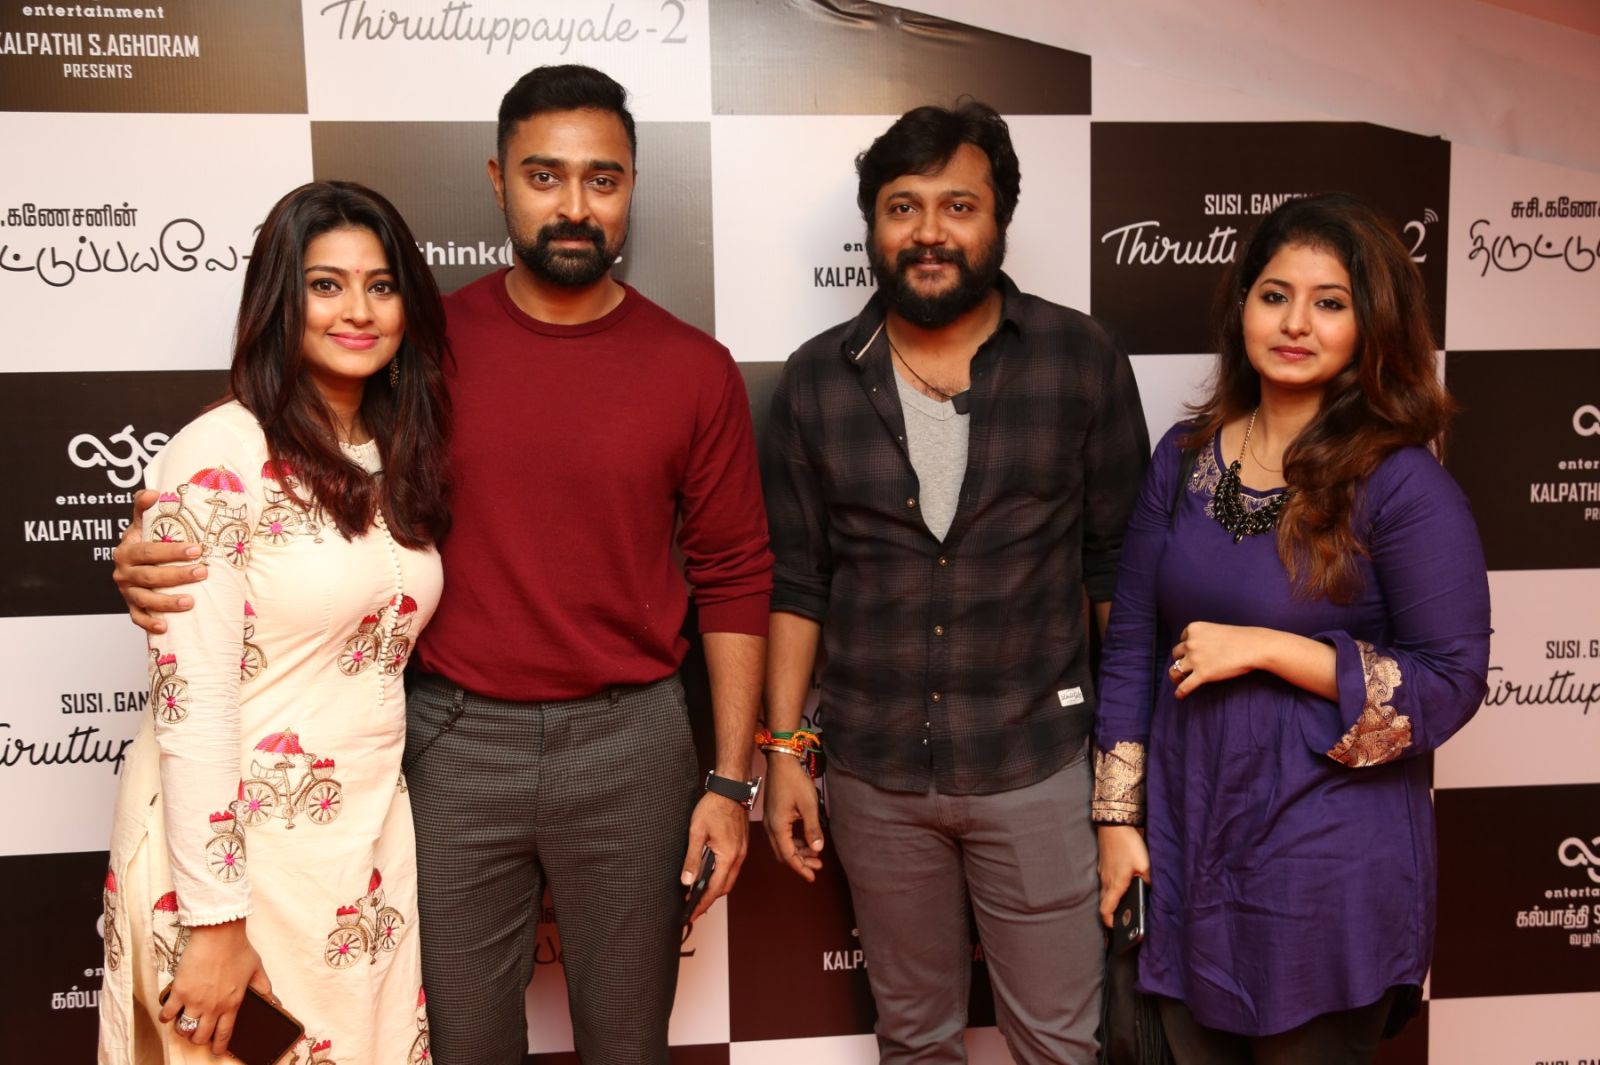 Thiruttuppayale 2 Red Carpet Premiere Show Stills (17)